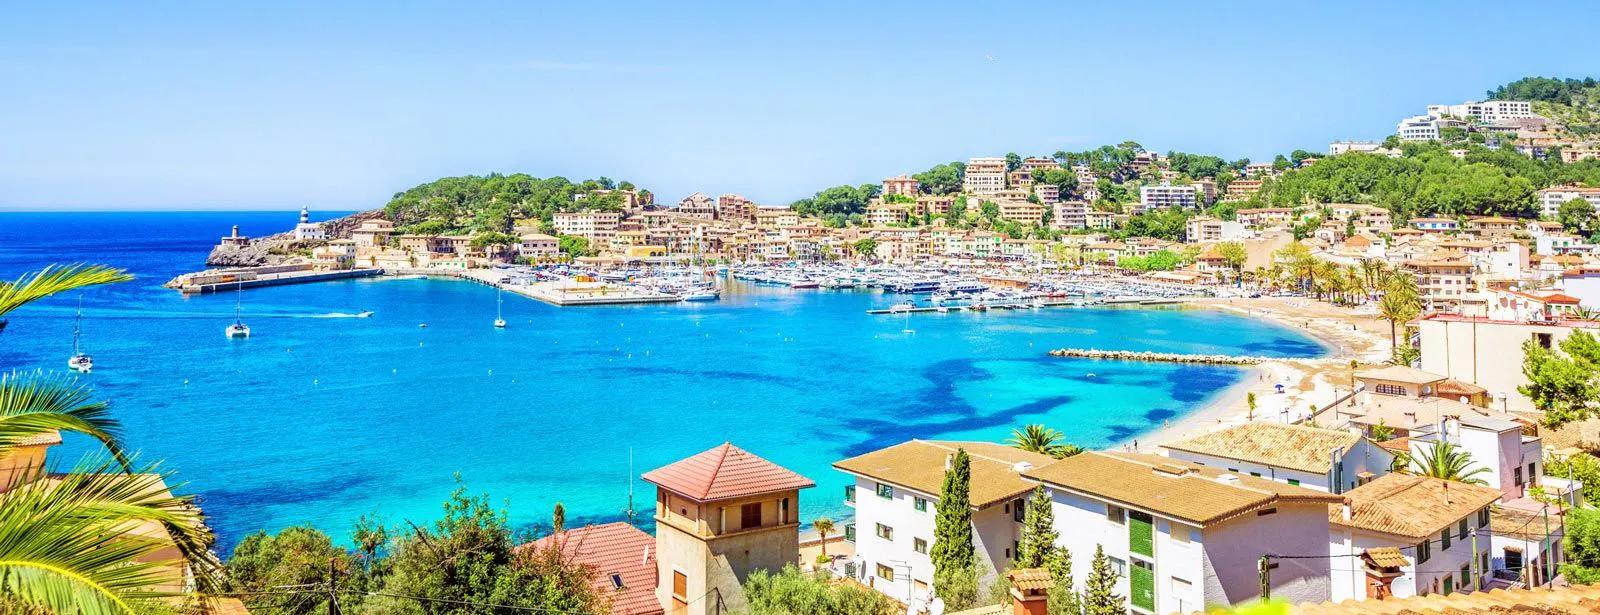 A town on the coast of Mallorca, Spain